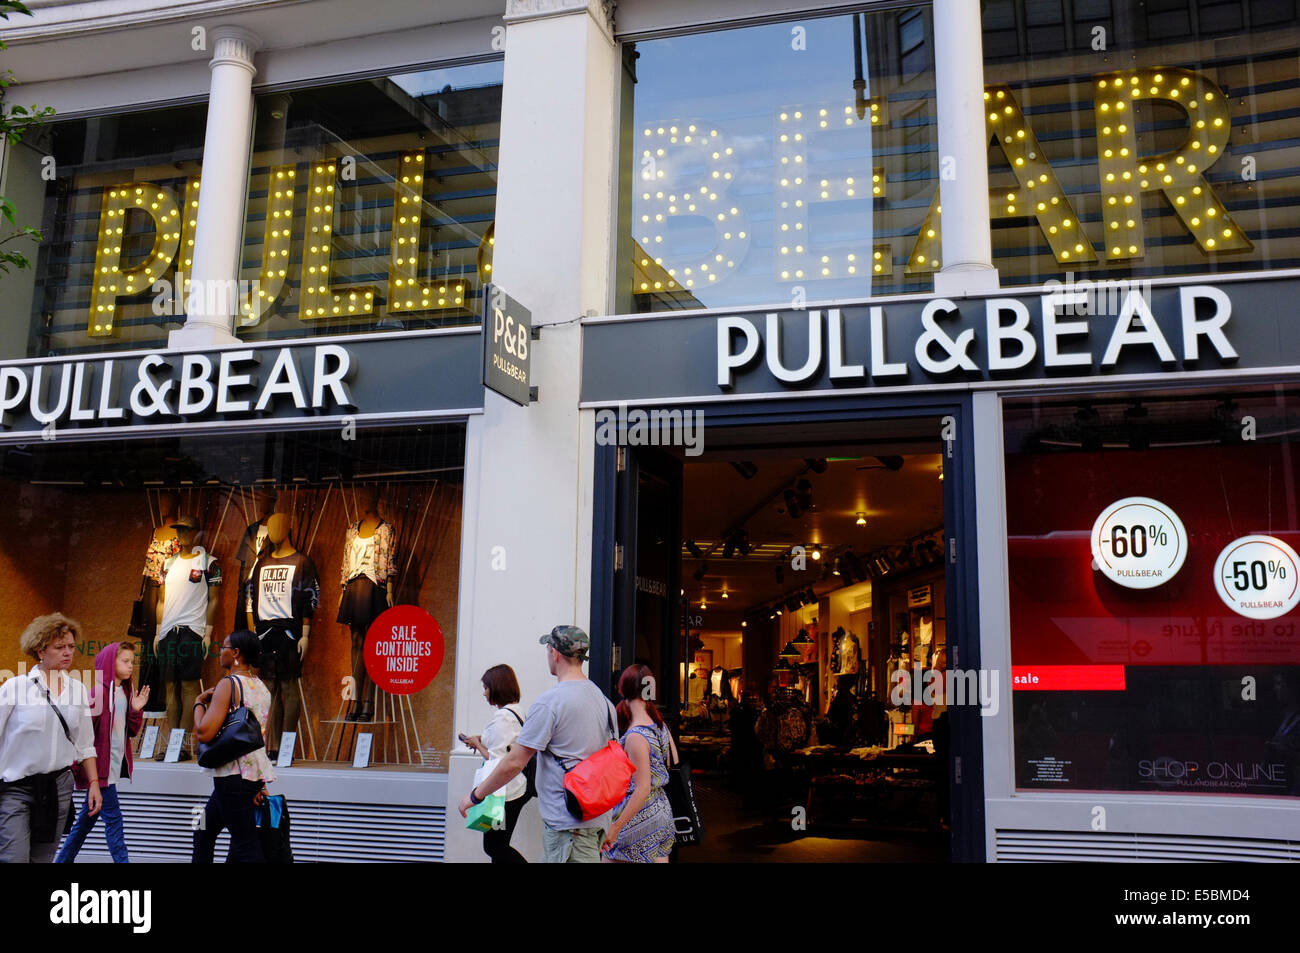 Pull & Bear Store on Oxford Street, London Stock Photo - Alamy